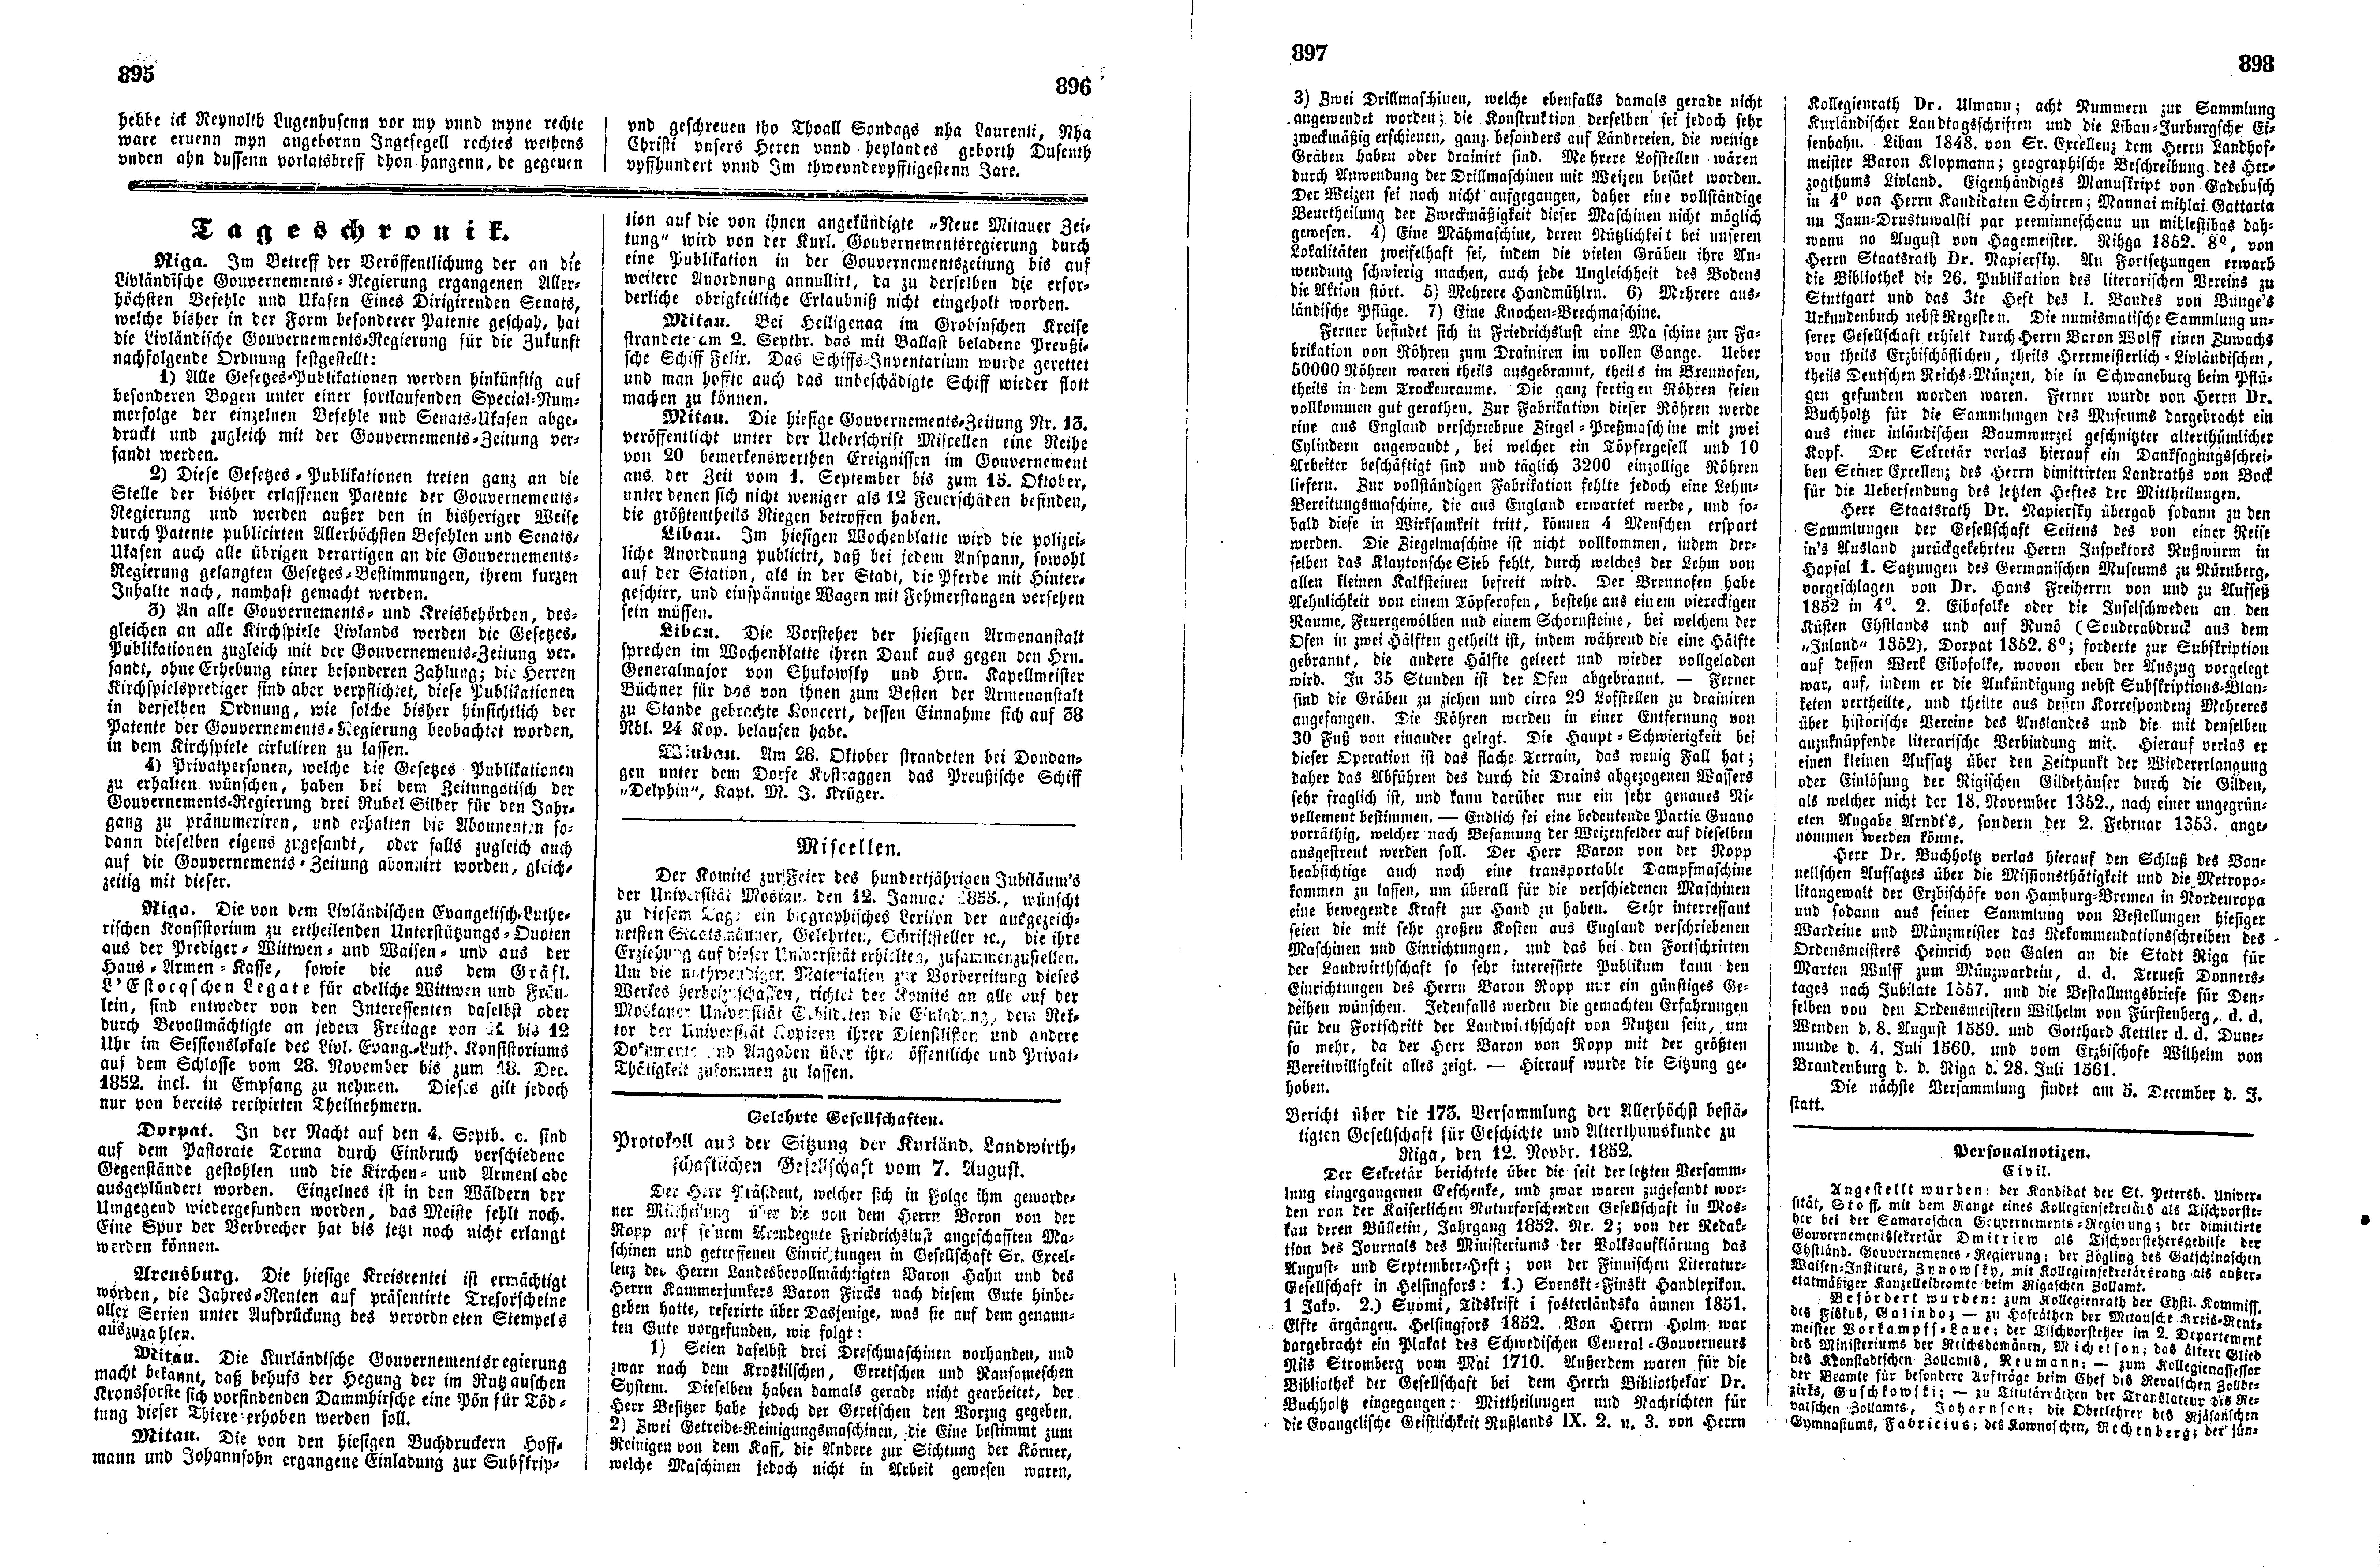 Das Inland [17] (1852) | 229. (895-898) Main body of text